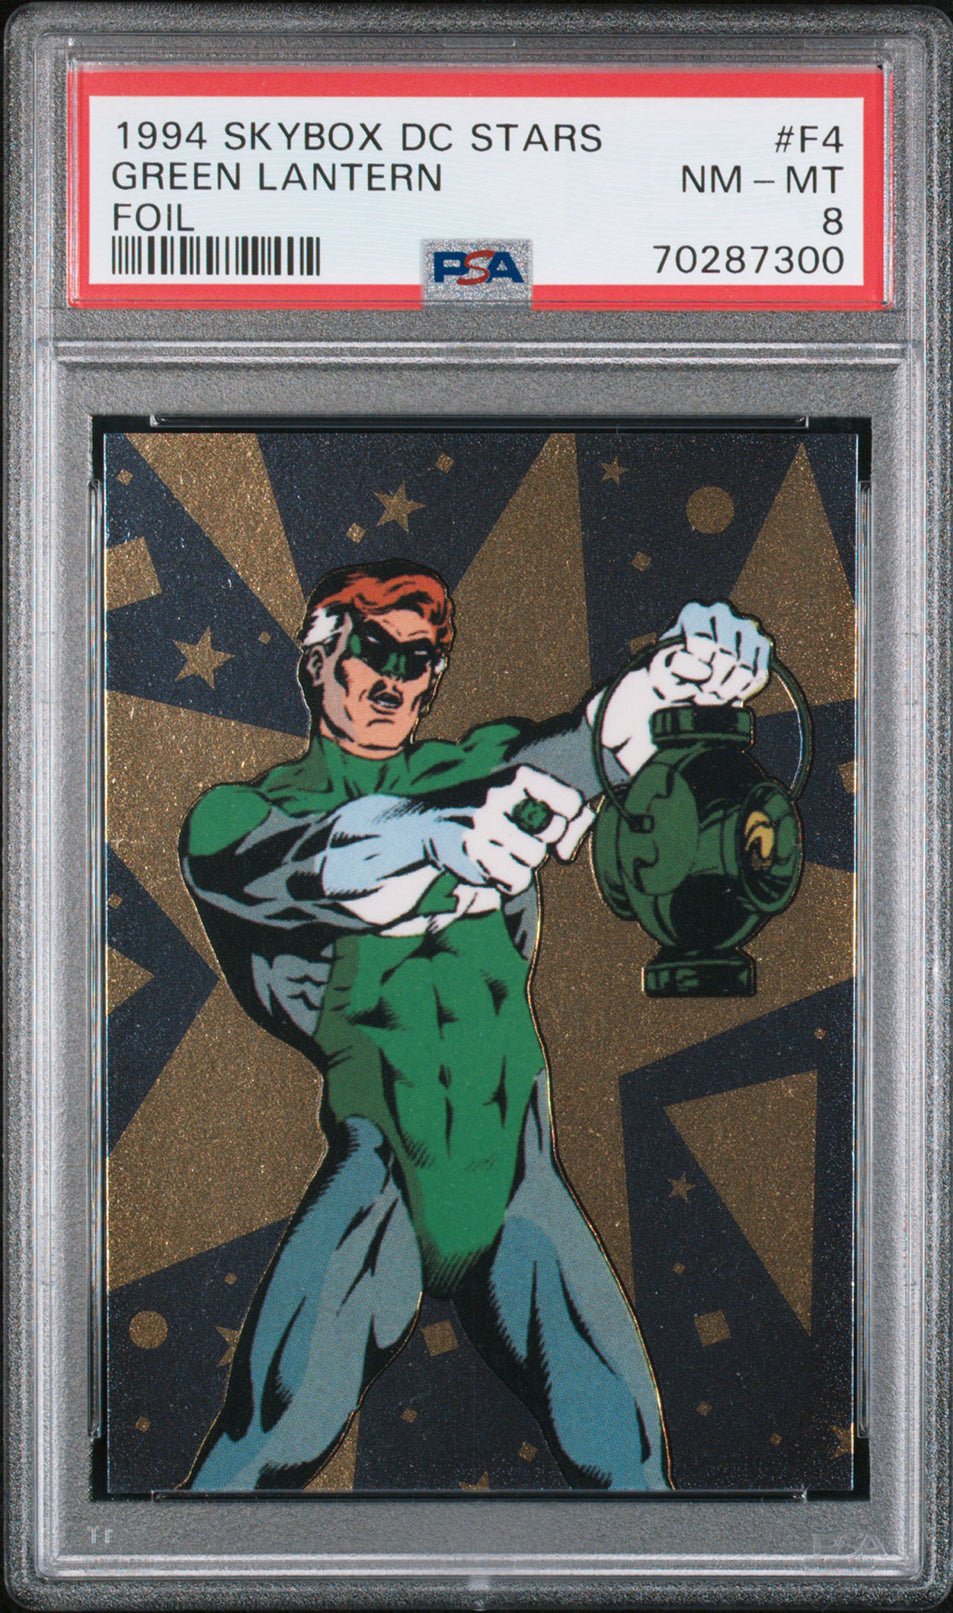 GREEN LANTERN PSA 8 1994 Skybox DC Stars Foil #F4 DC Comics Graded Cards Insert - Hobby Gems